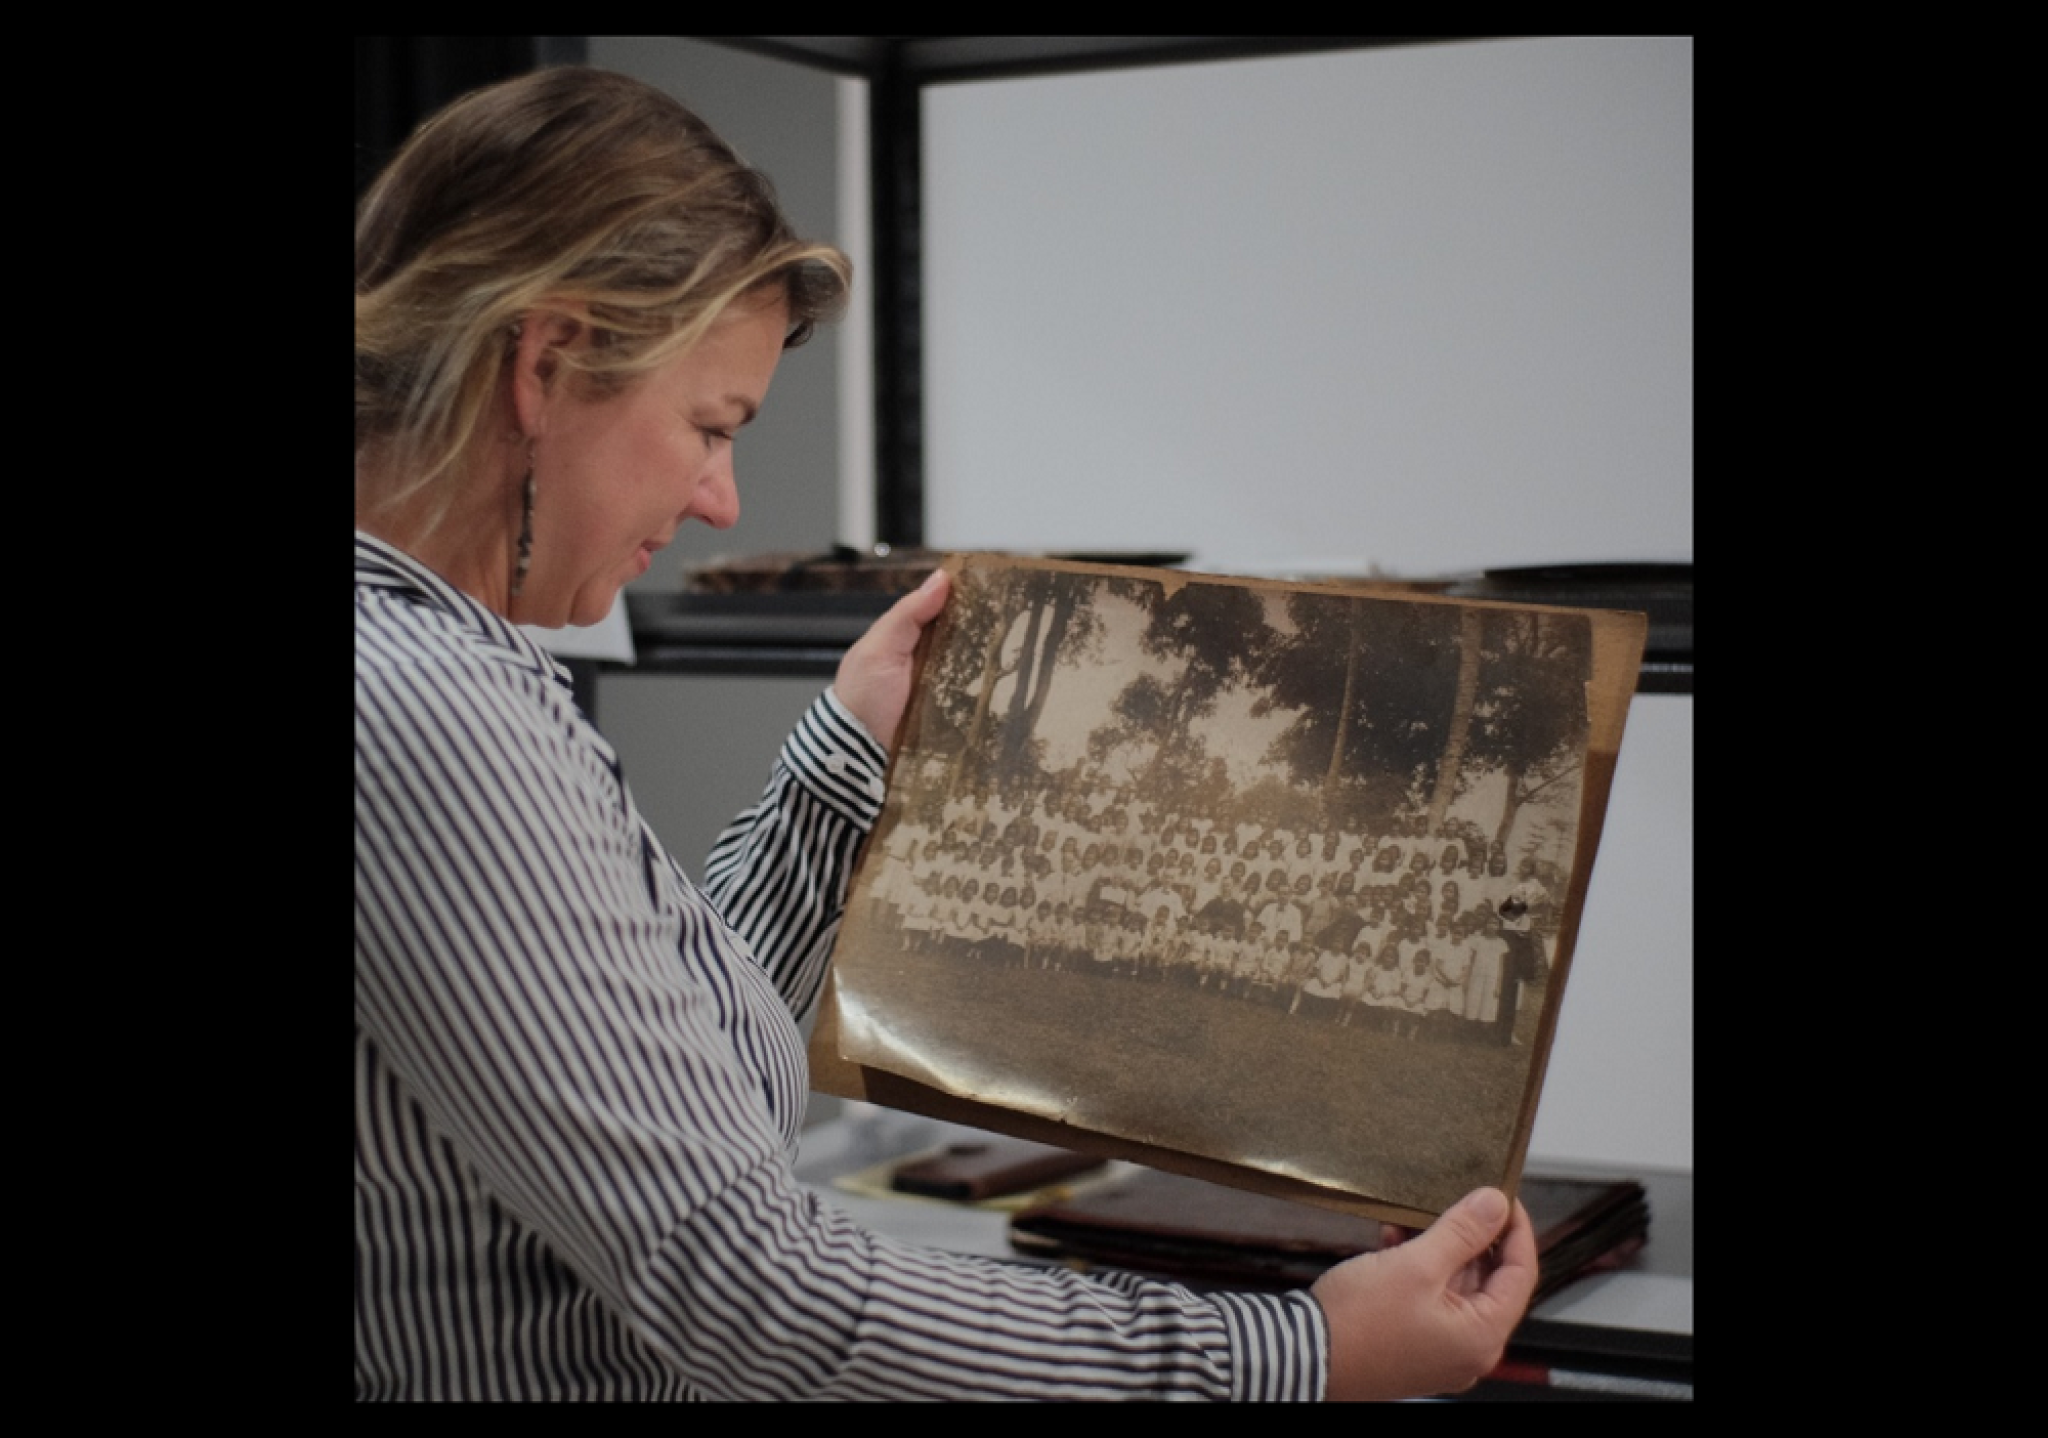 Maaike Derksen examining archival photos